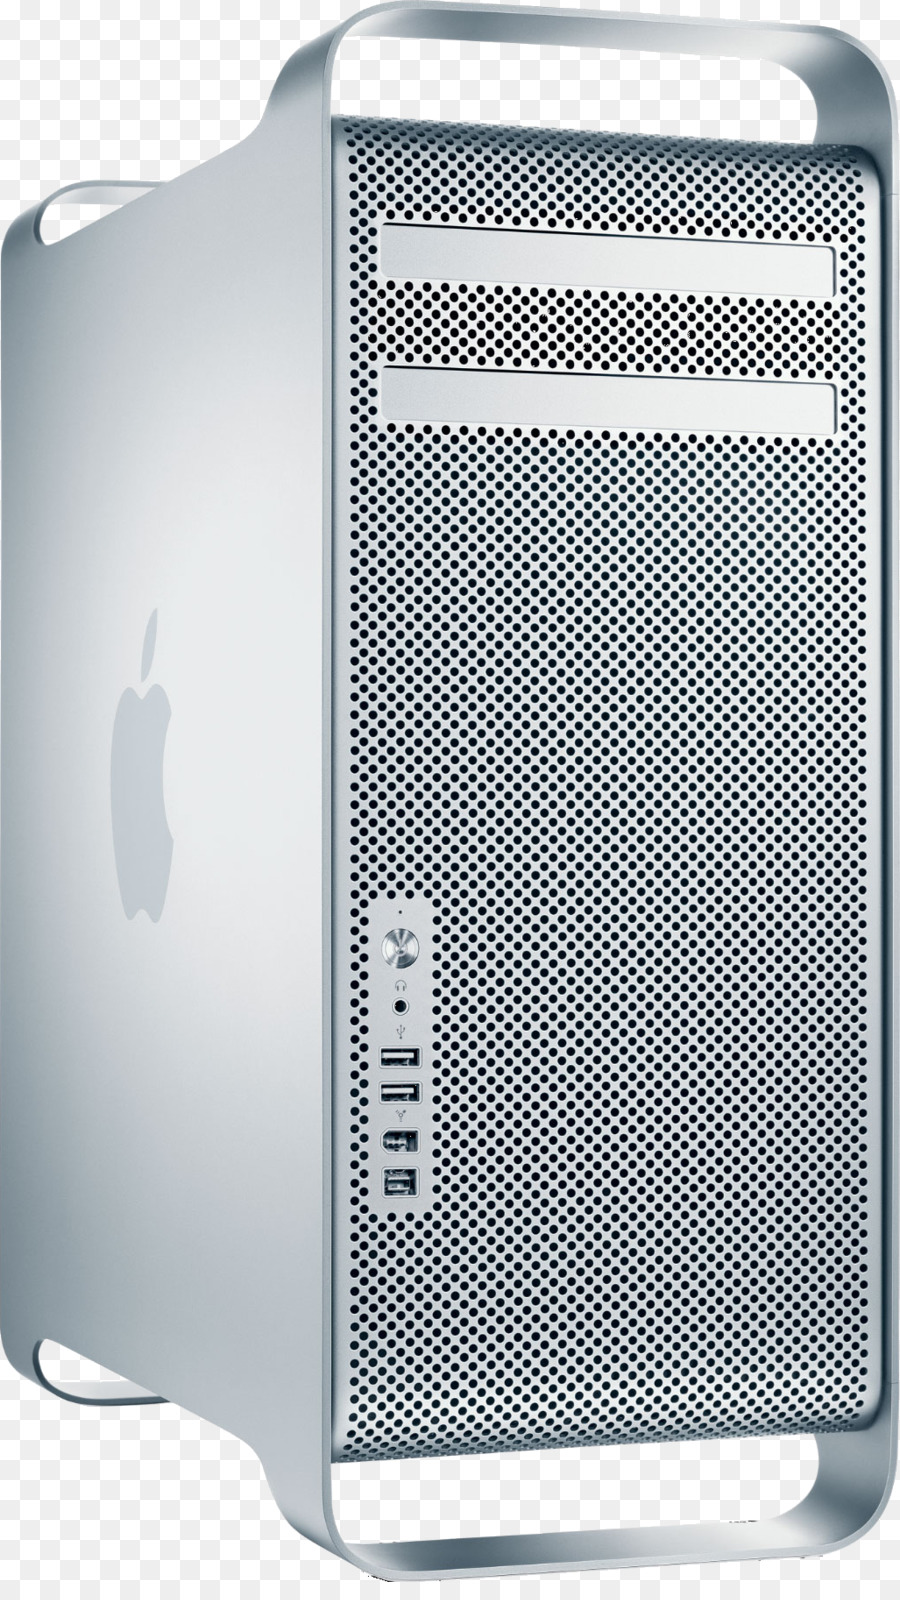 MacBook Pro Mac Pro Táo Intel - 